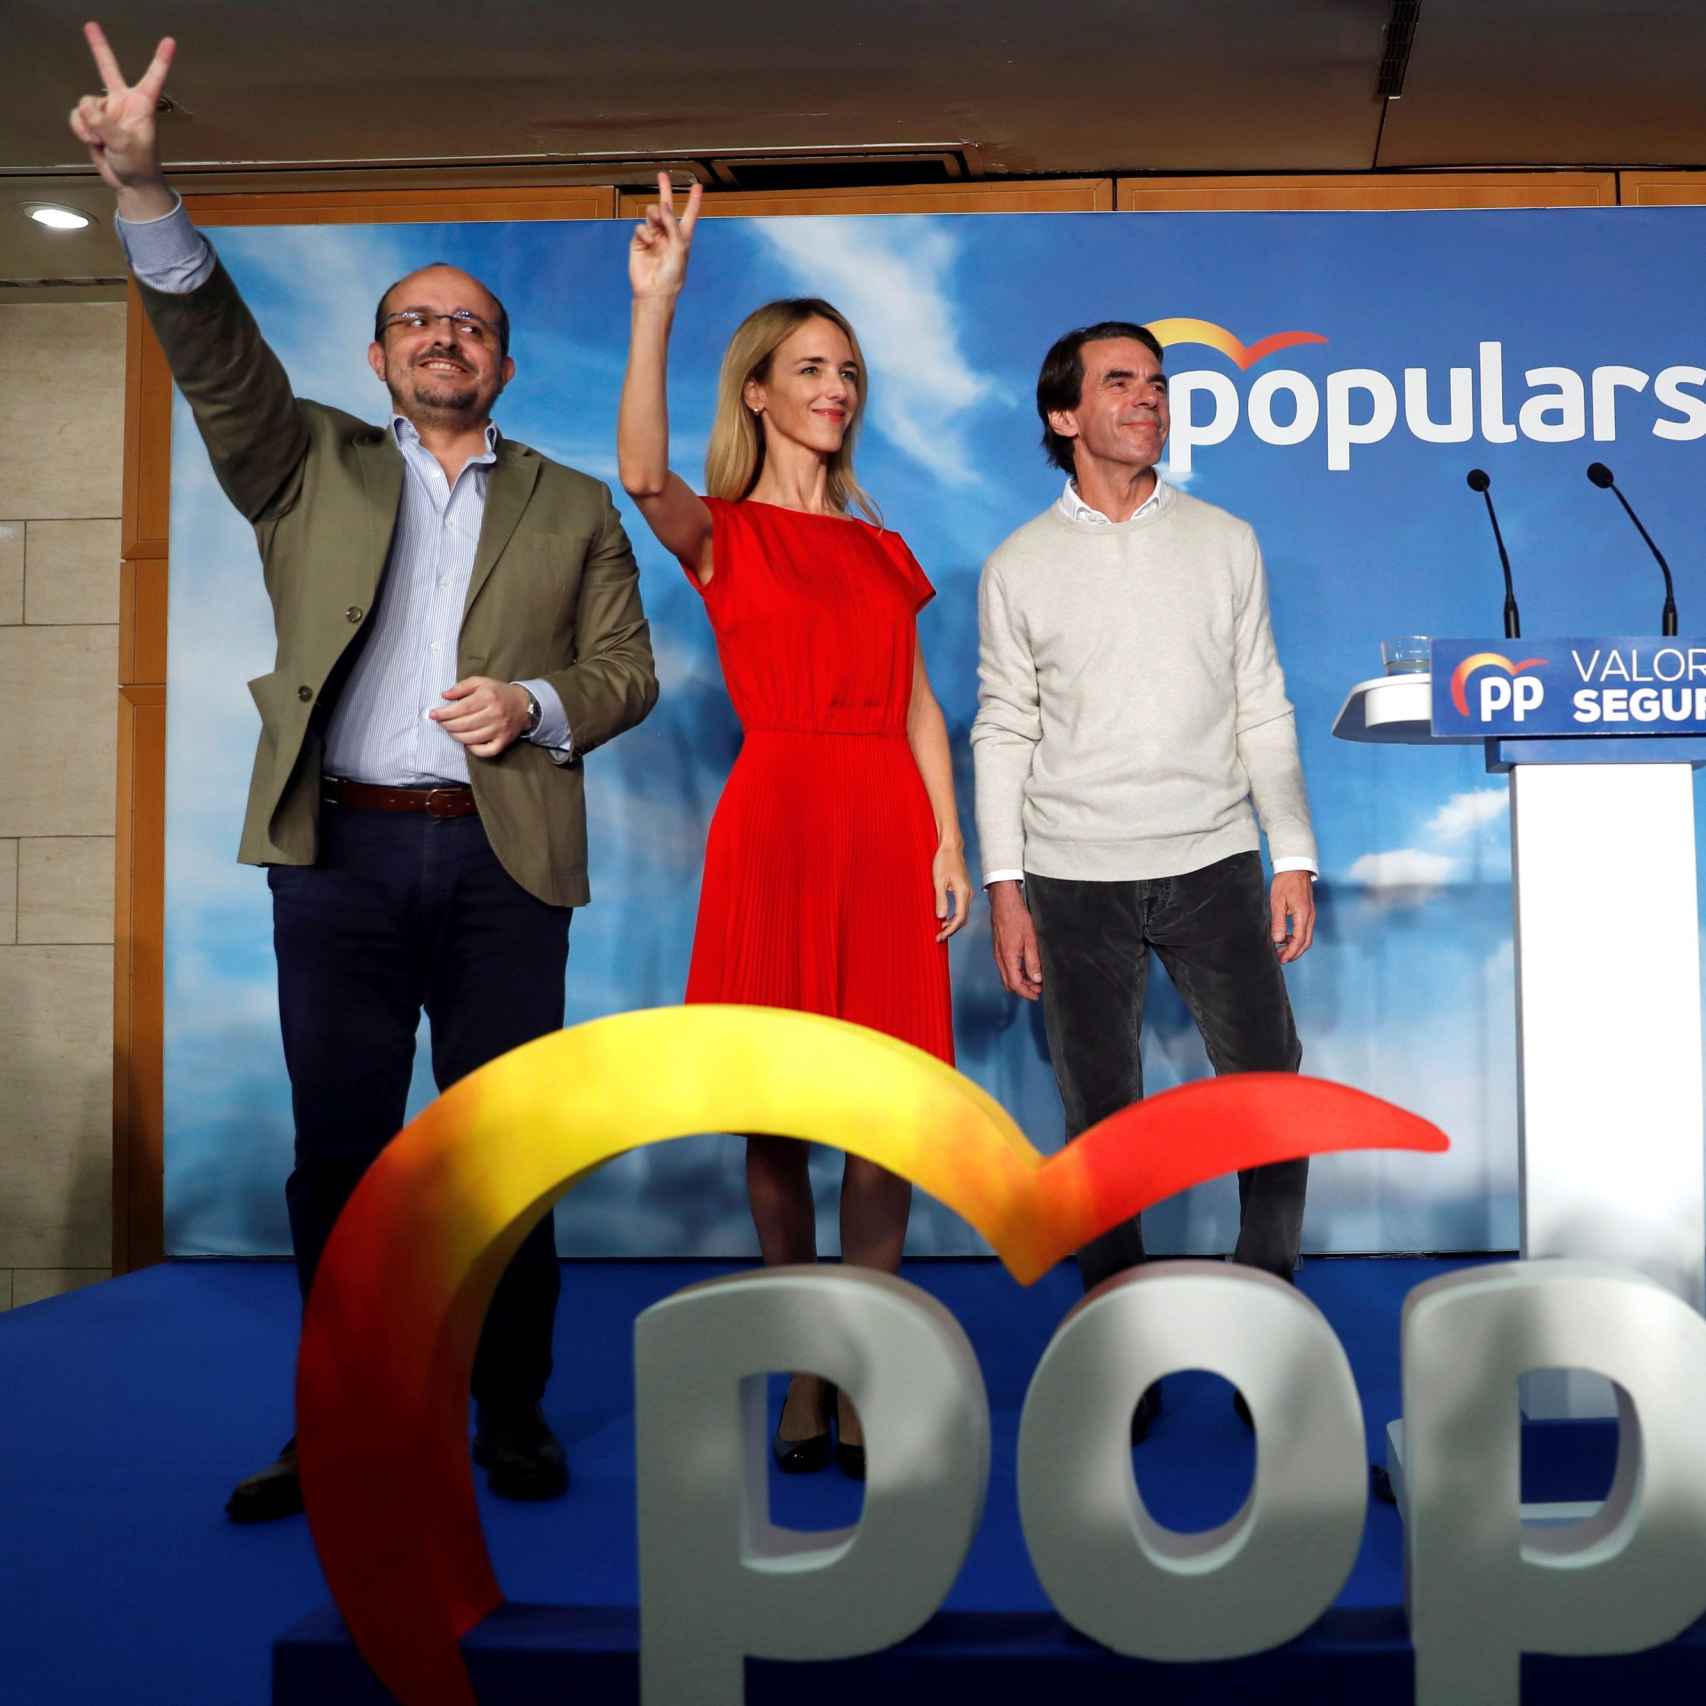 Cayetana_Alvarez_de_Toledo-Jose_Maria_Aznar-PP_Partido_Popular-Elecciones_Generales_2019-Politica_390473078_120293118_1706x1706.jpg